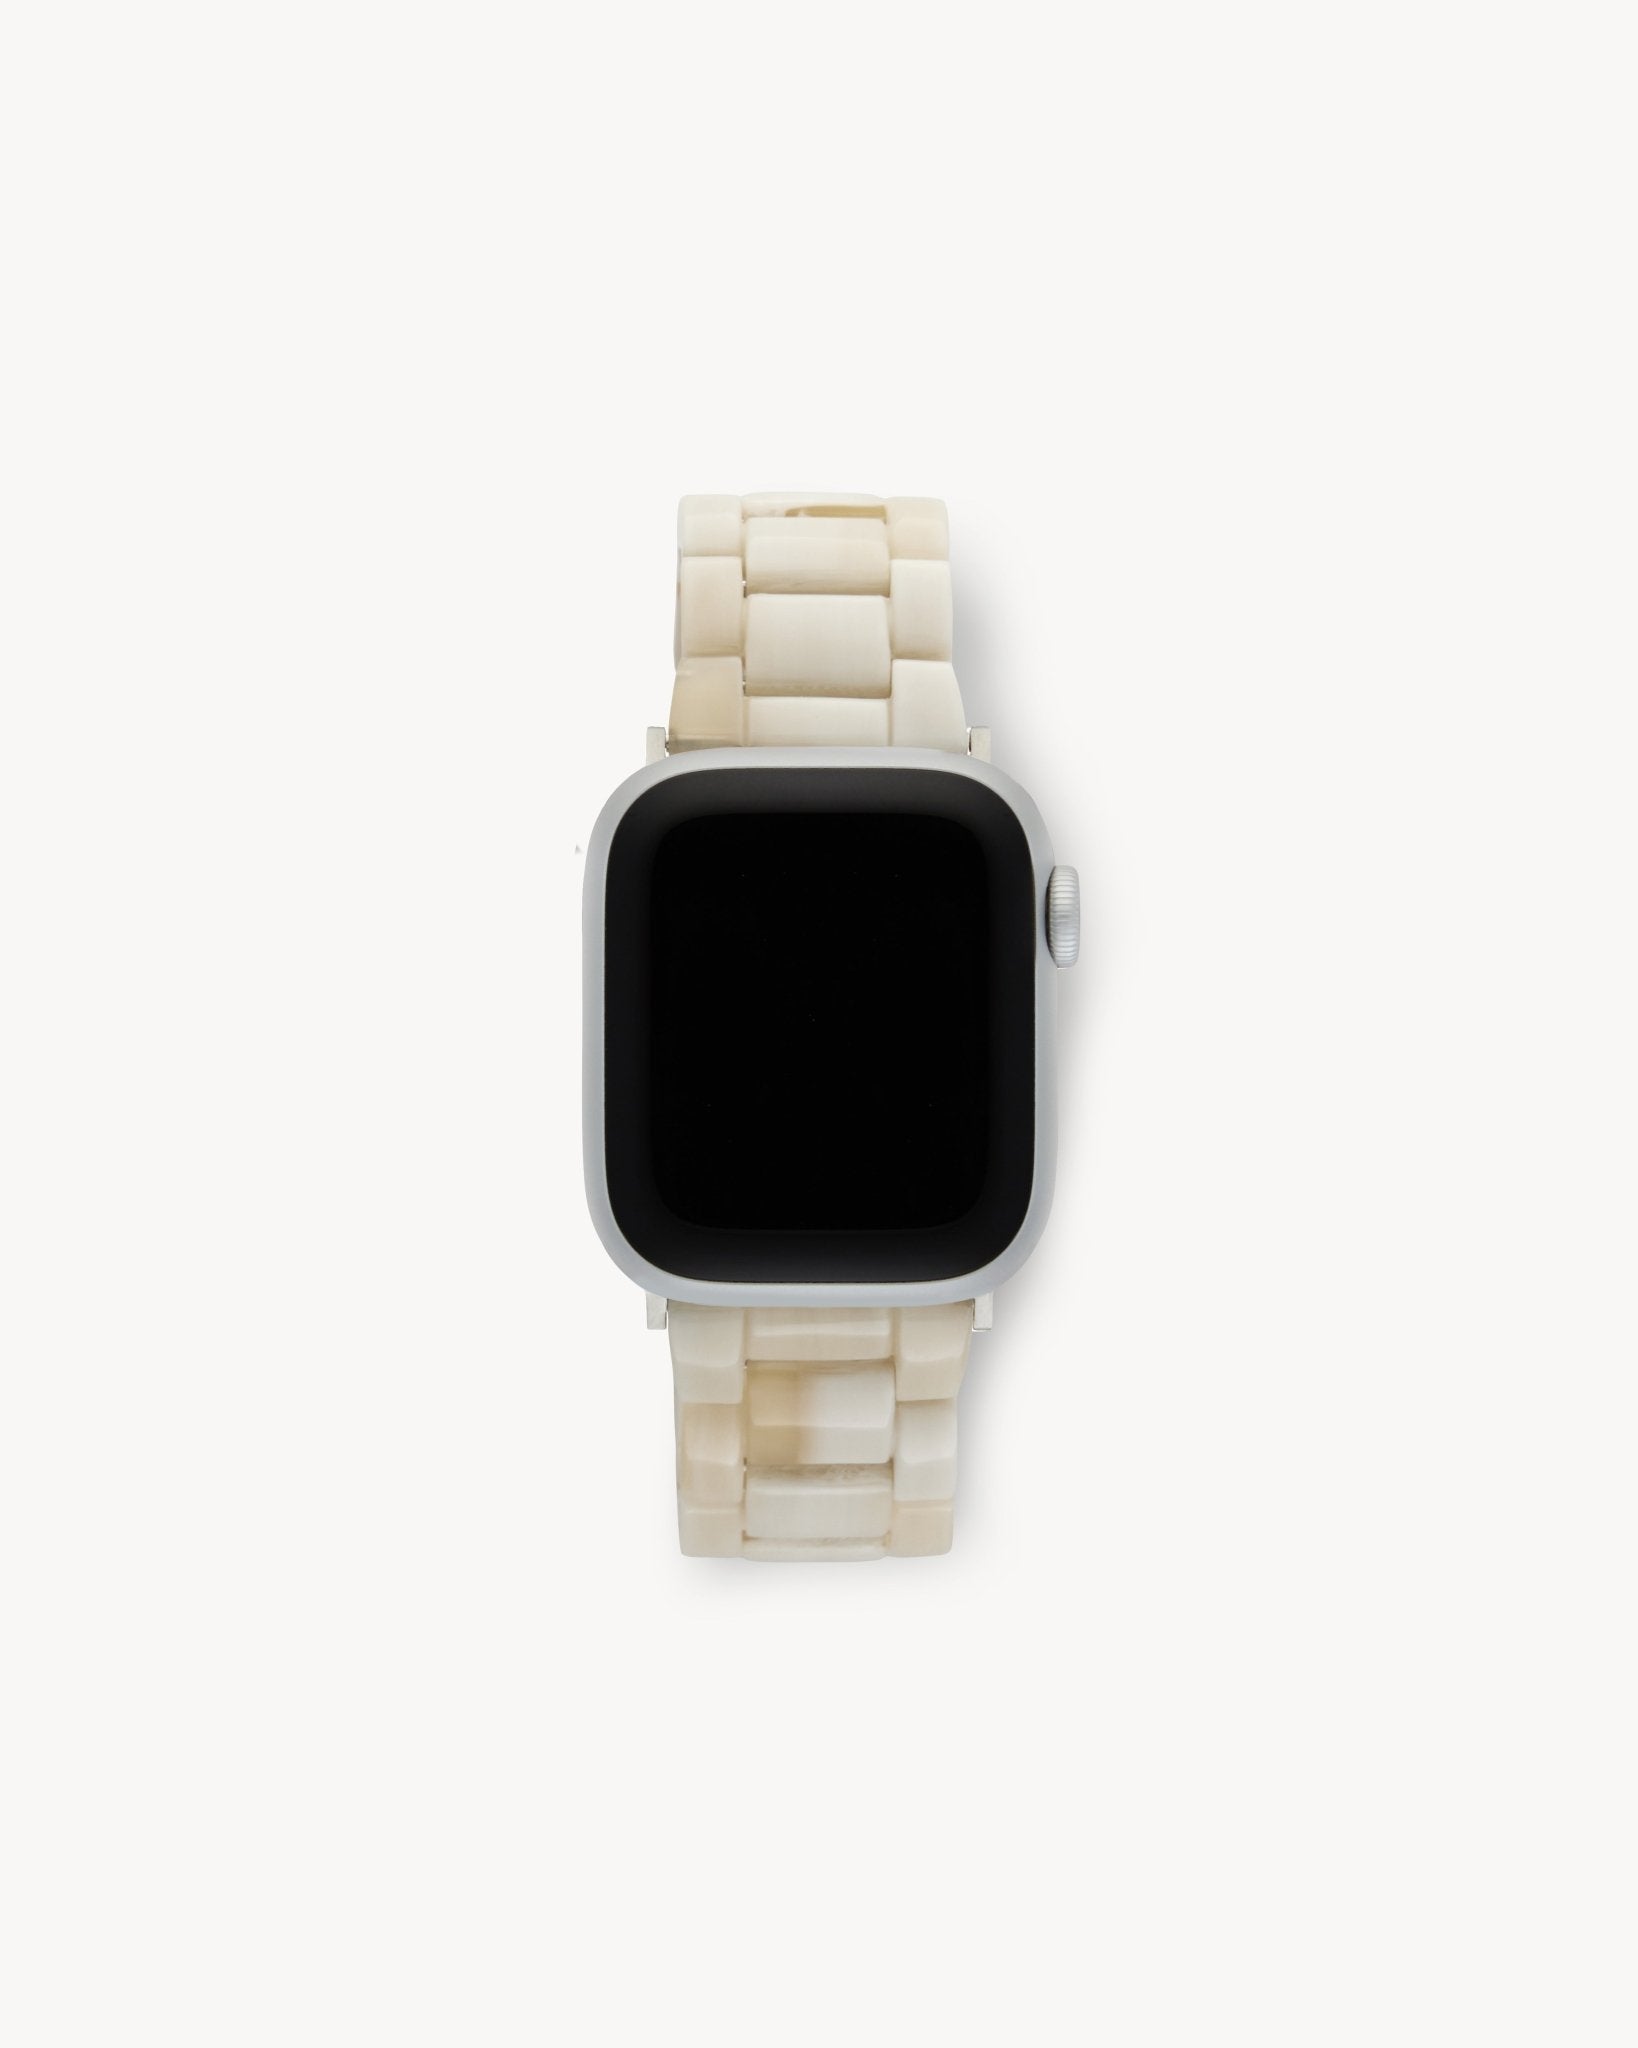 MACHETE Deluxe Apple Watch Band in Alabaster